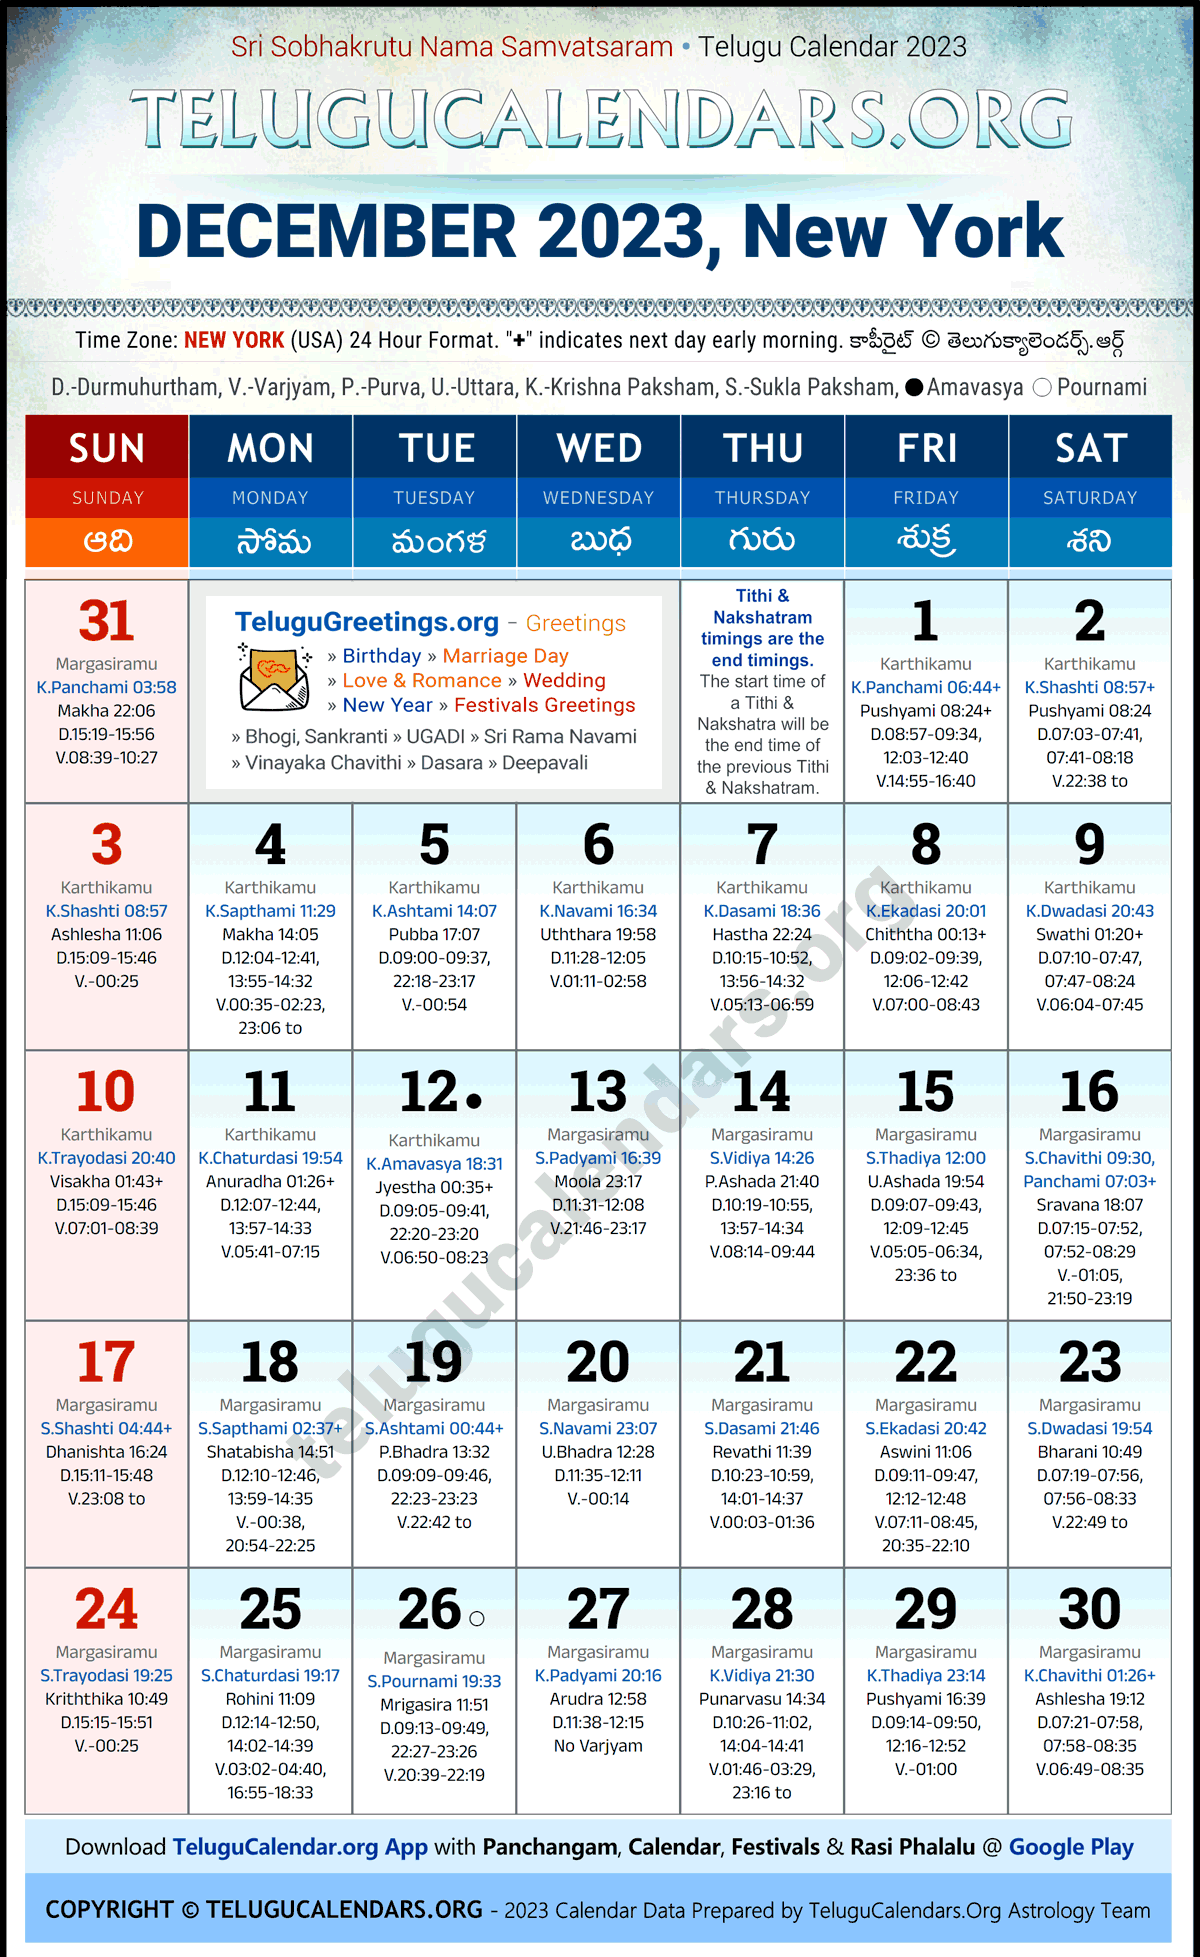 Telugu Calendar 2023 December Festivals for New York